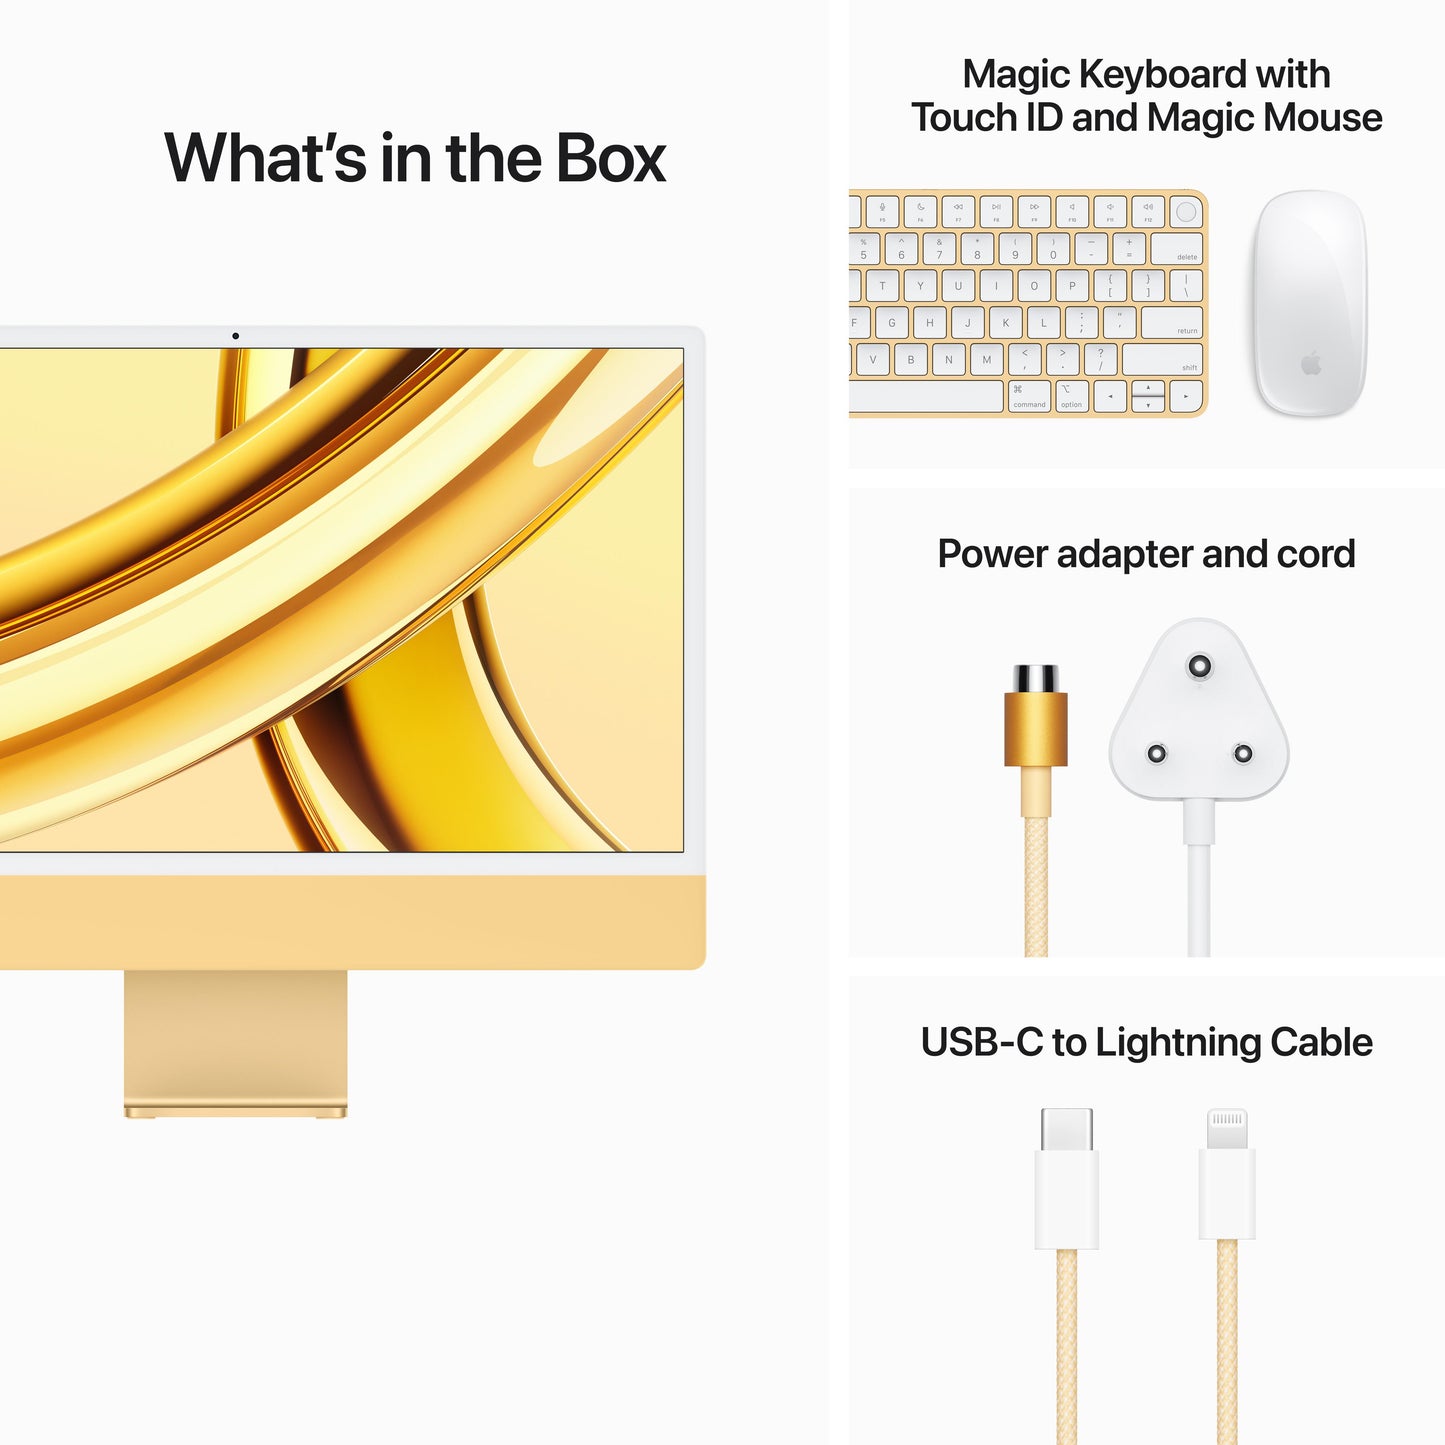 24-inch iMac with Retina 4.5K display: Apple M3 chip with 8‑core CPU and 10‑core GPU, 256GB SSD - Yellow